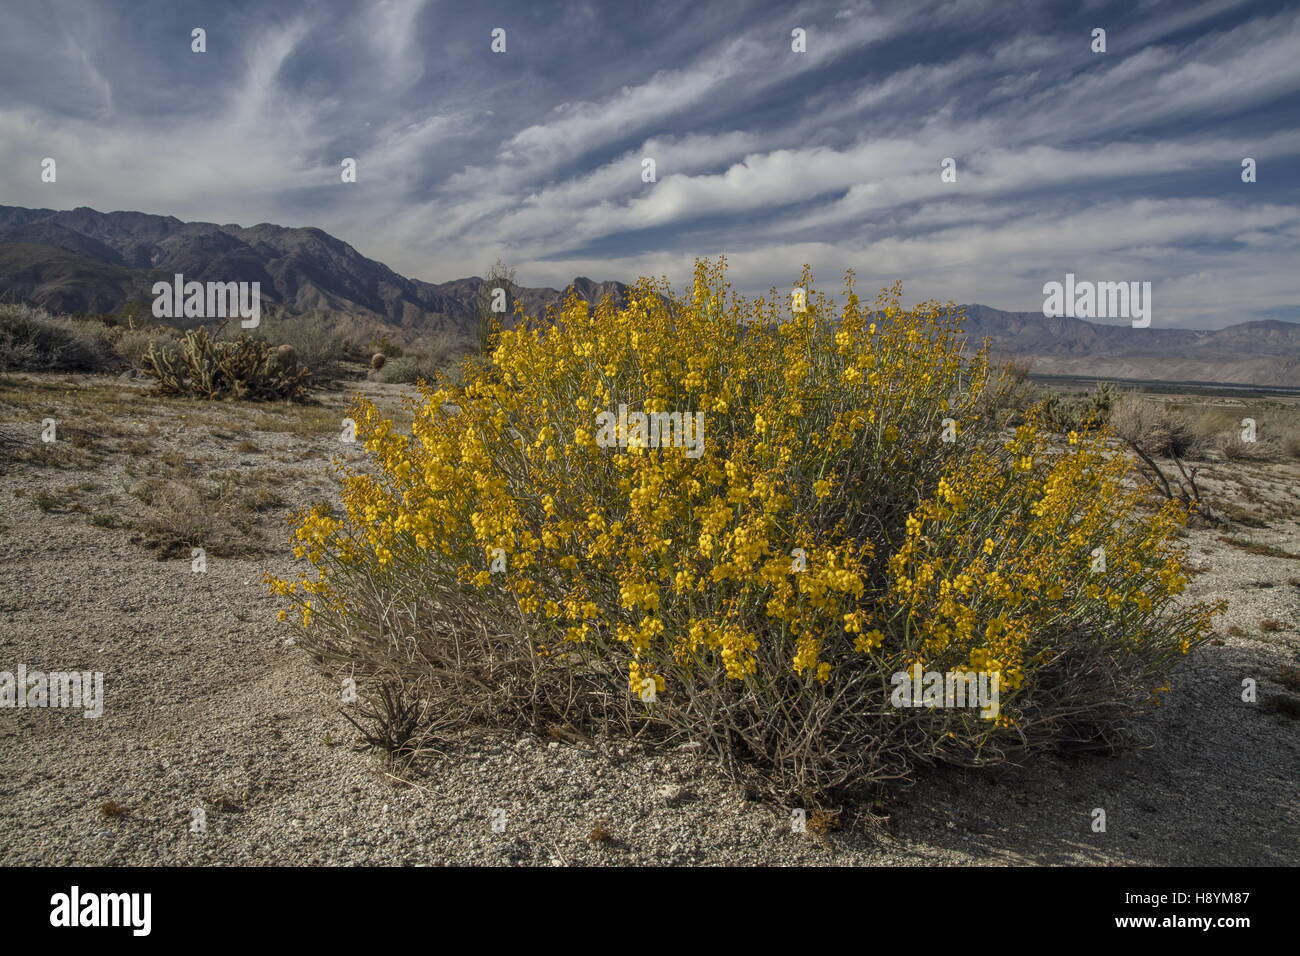 Desert senna, Senna armata, in flower in the Californian Desert. Anza-Borrego Desert State Park, Sonoran Desert, California. Stock Photo